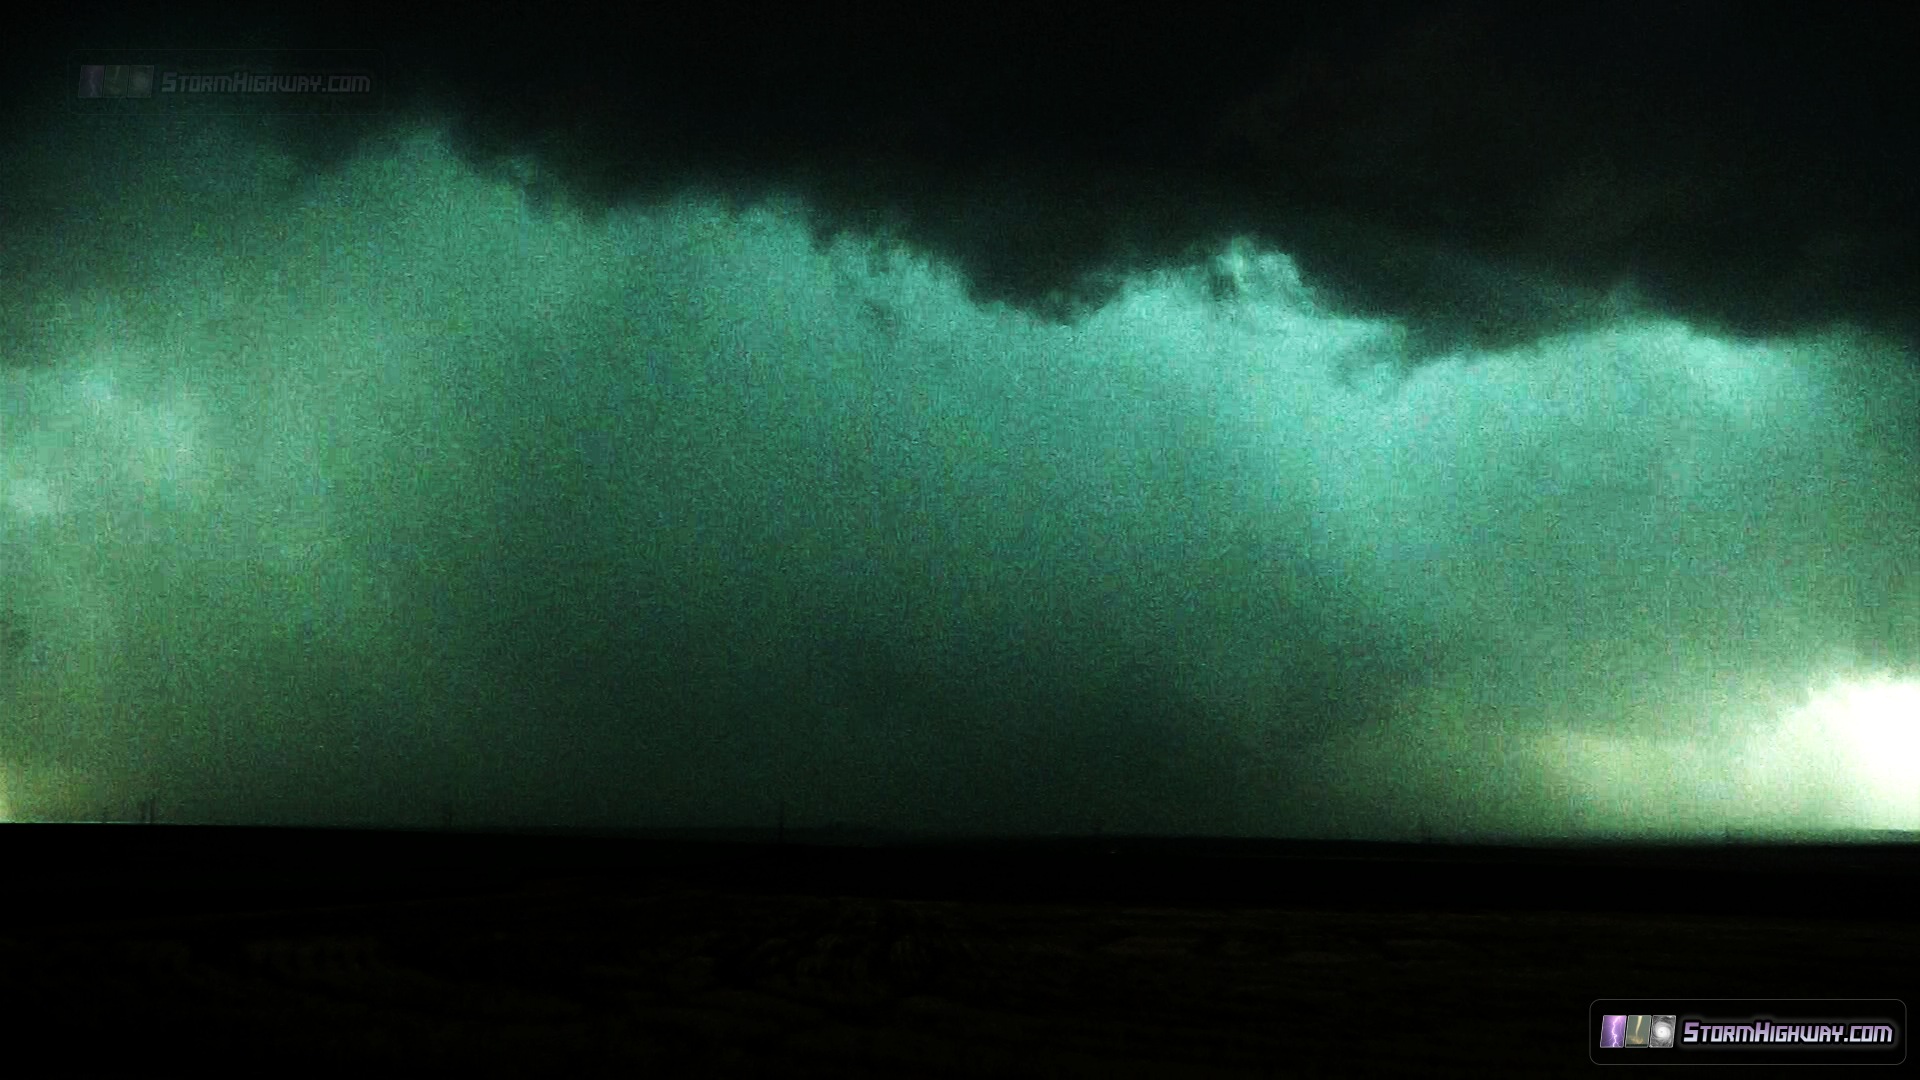 Possible tornado near Denver International Airport, Colorado - May 21, 2014